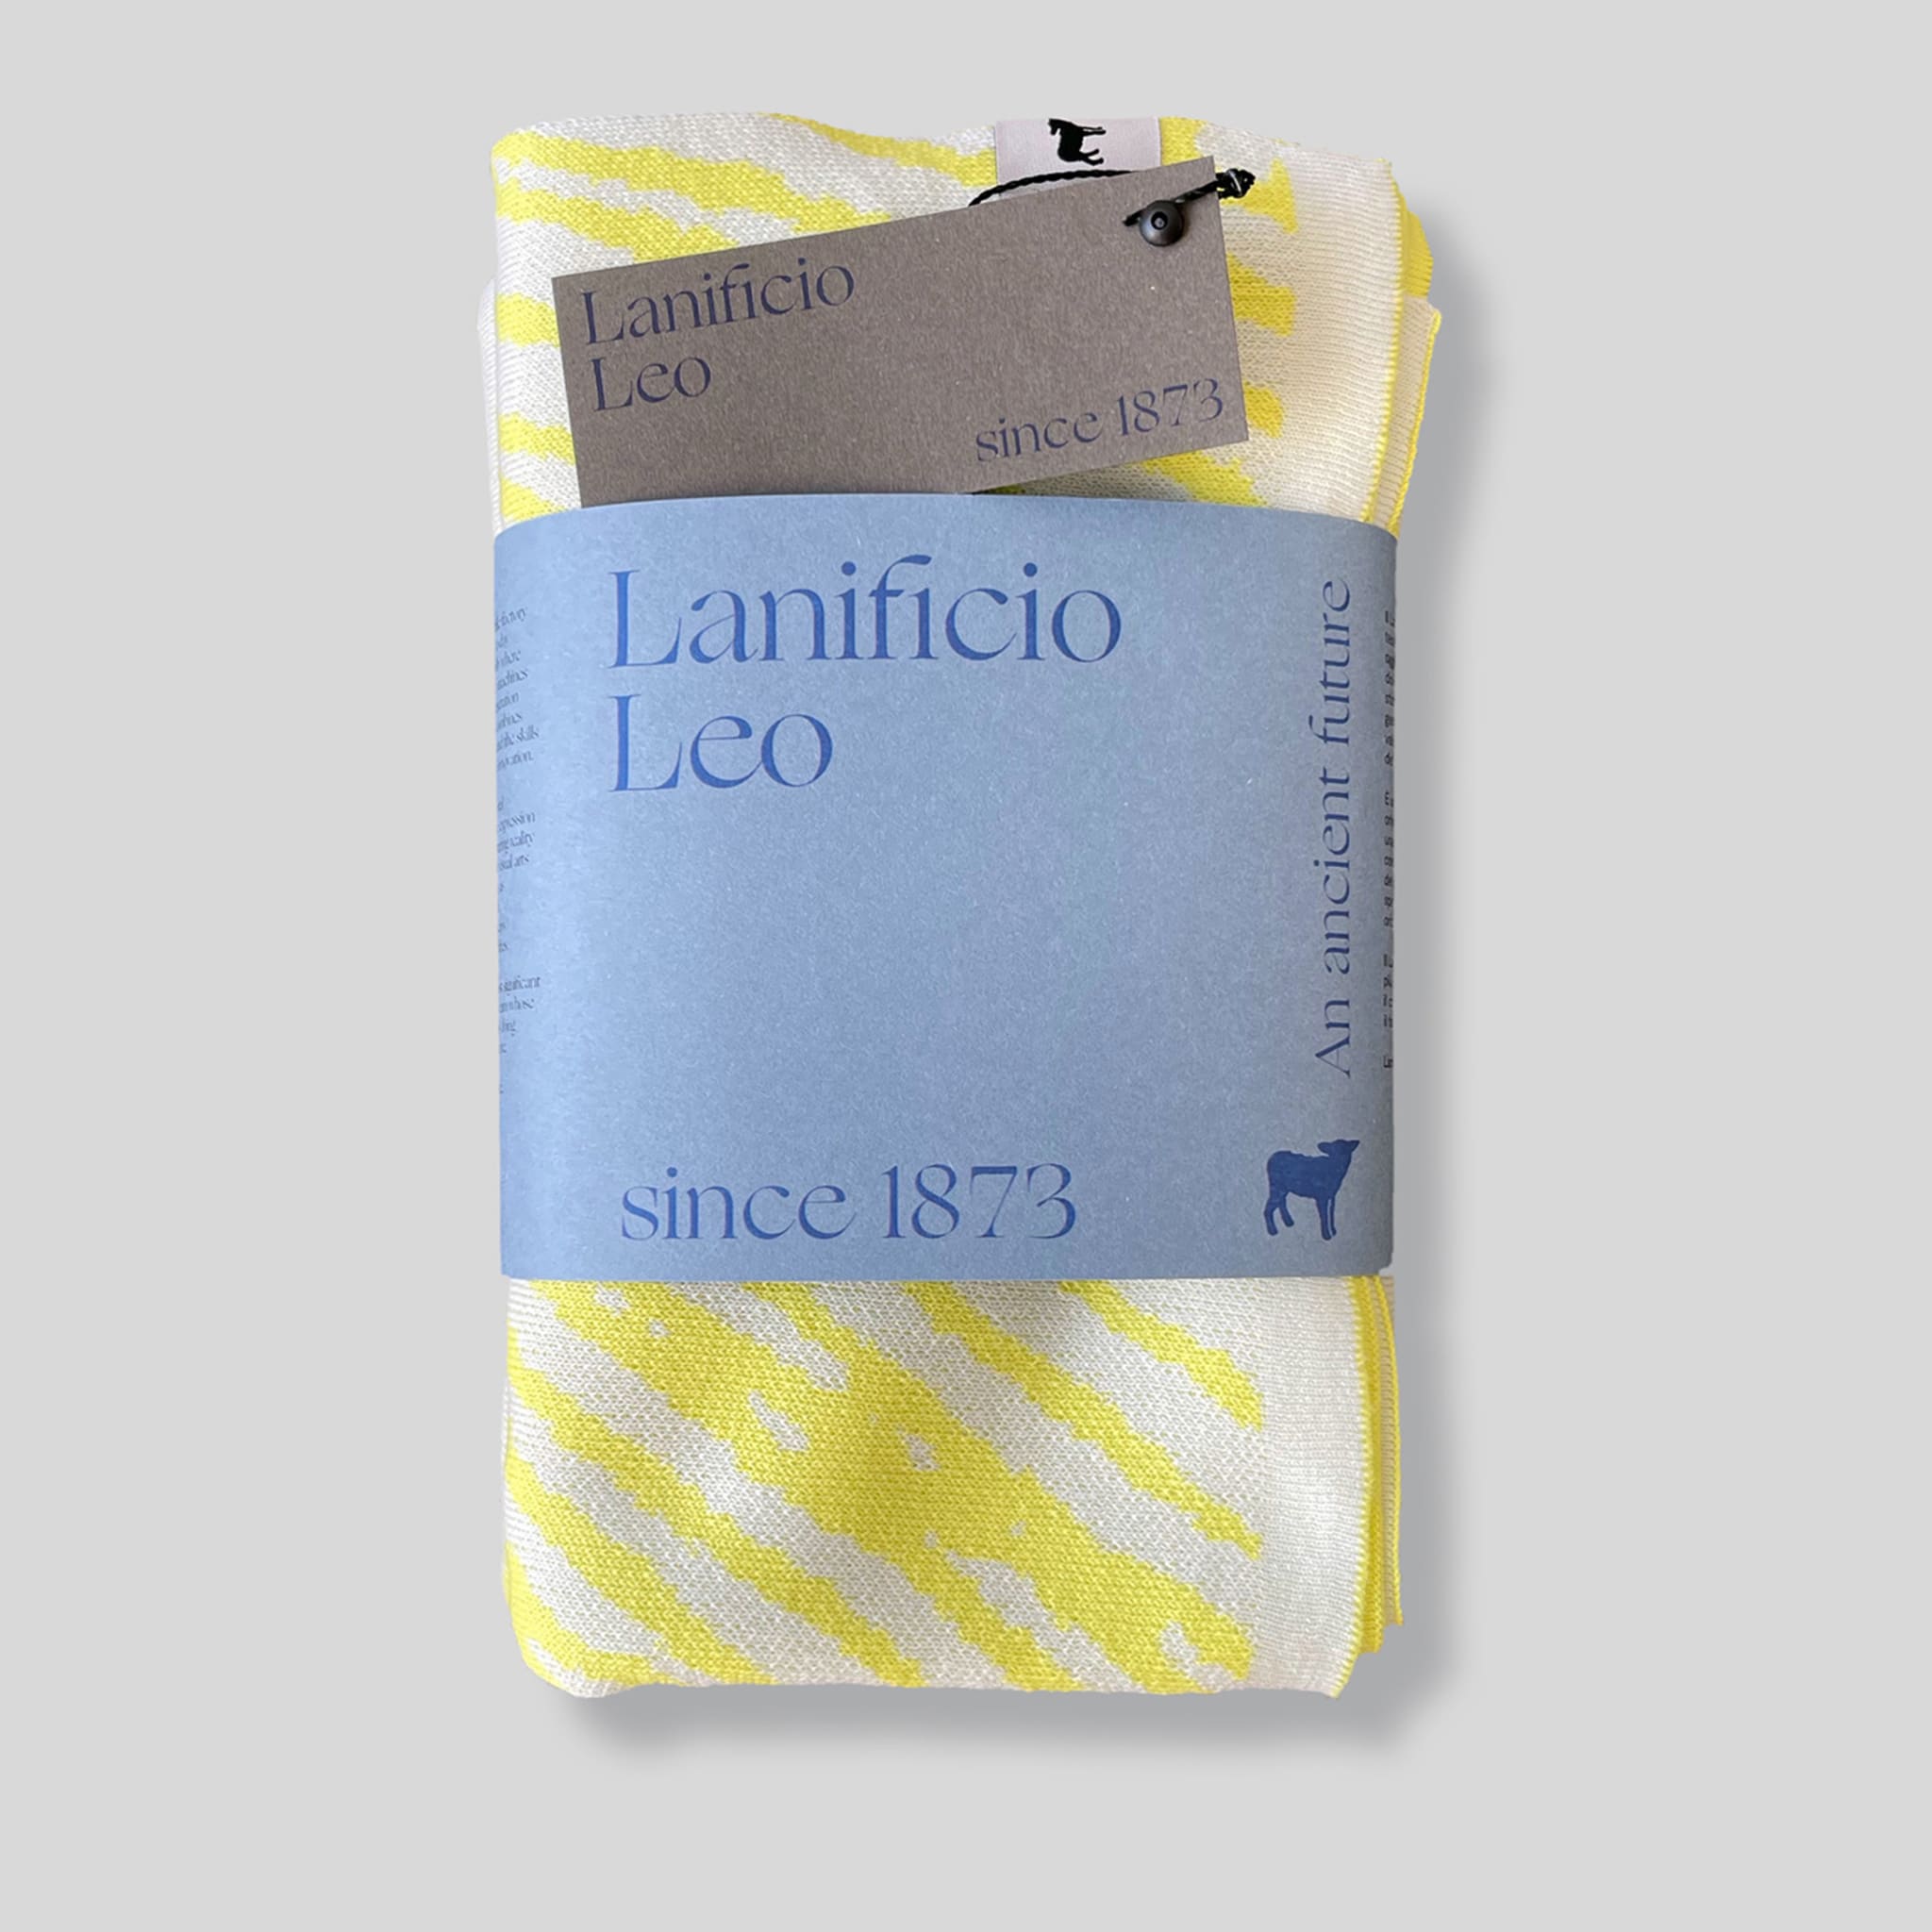 Tratto Bio Neon-Yellow & White Blanket by Emilio Salvatore Leo - Alternative view 3